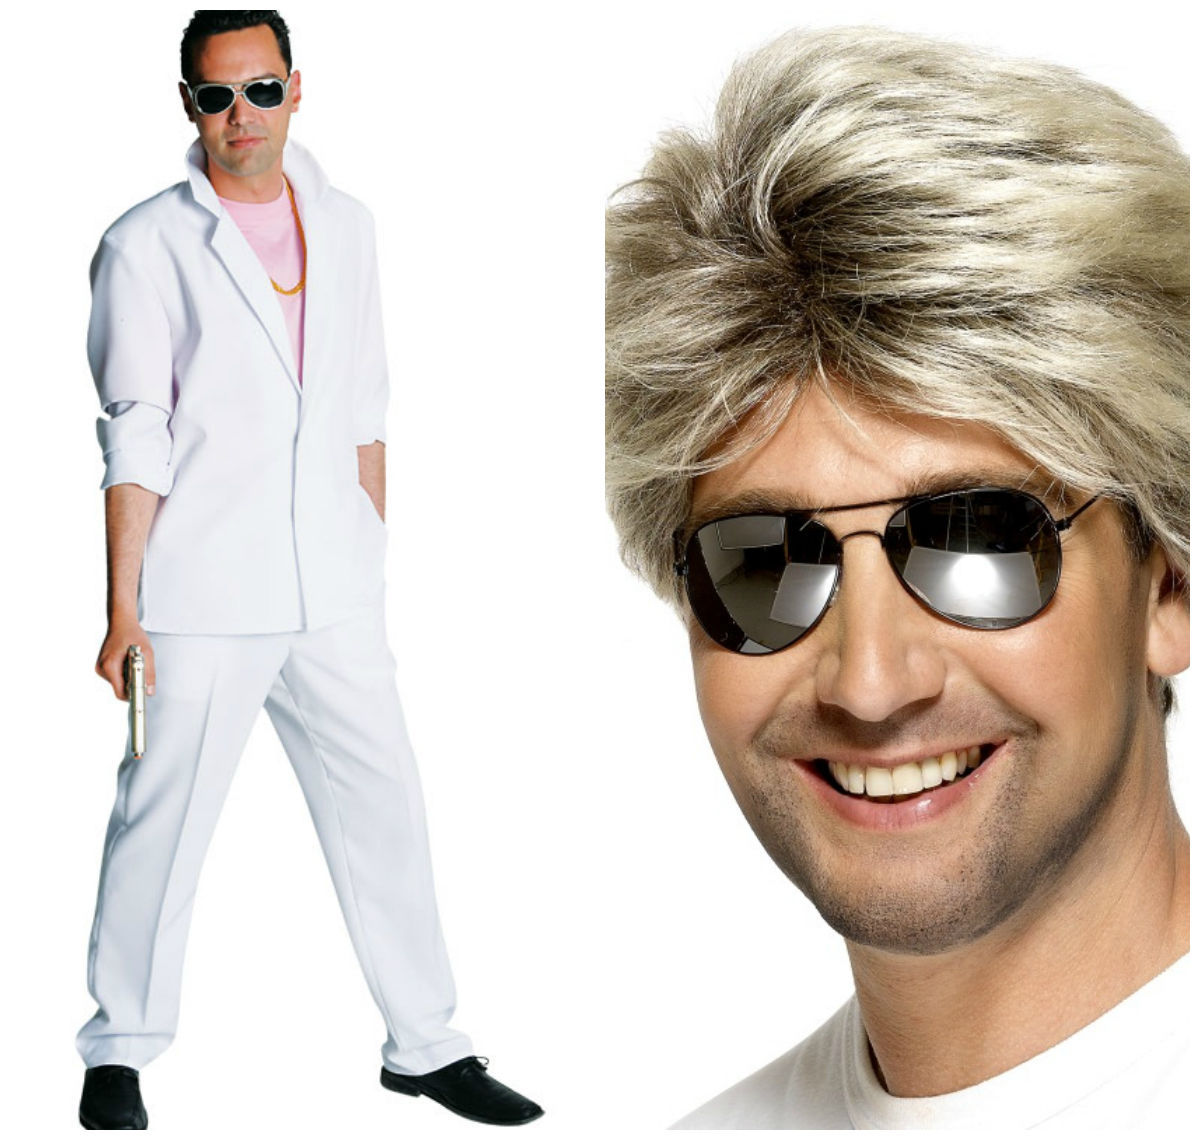 80's Deluxe Miami Vice , Crockett - White Suit - $18.35 - $56.98